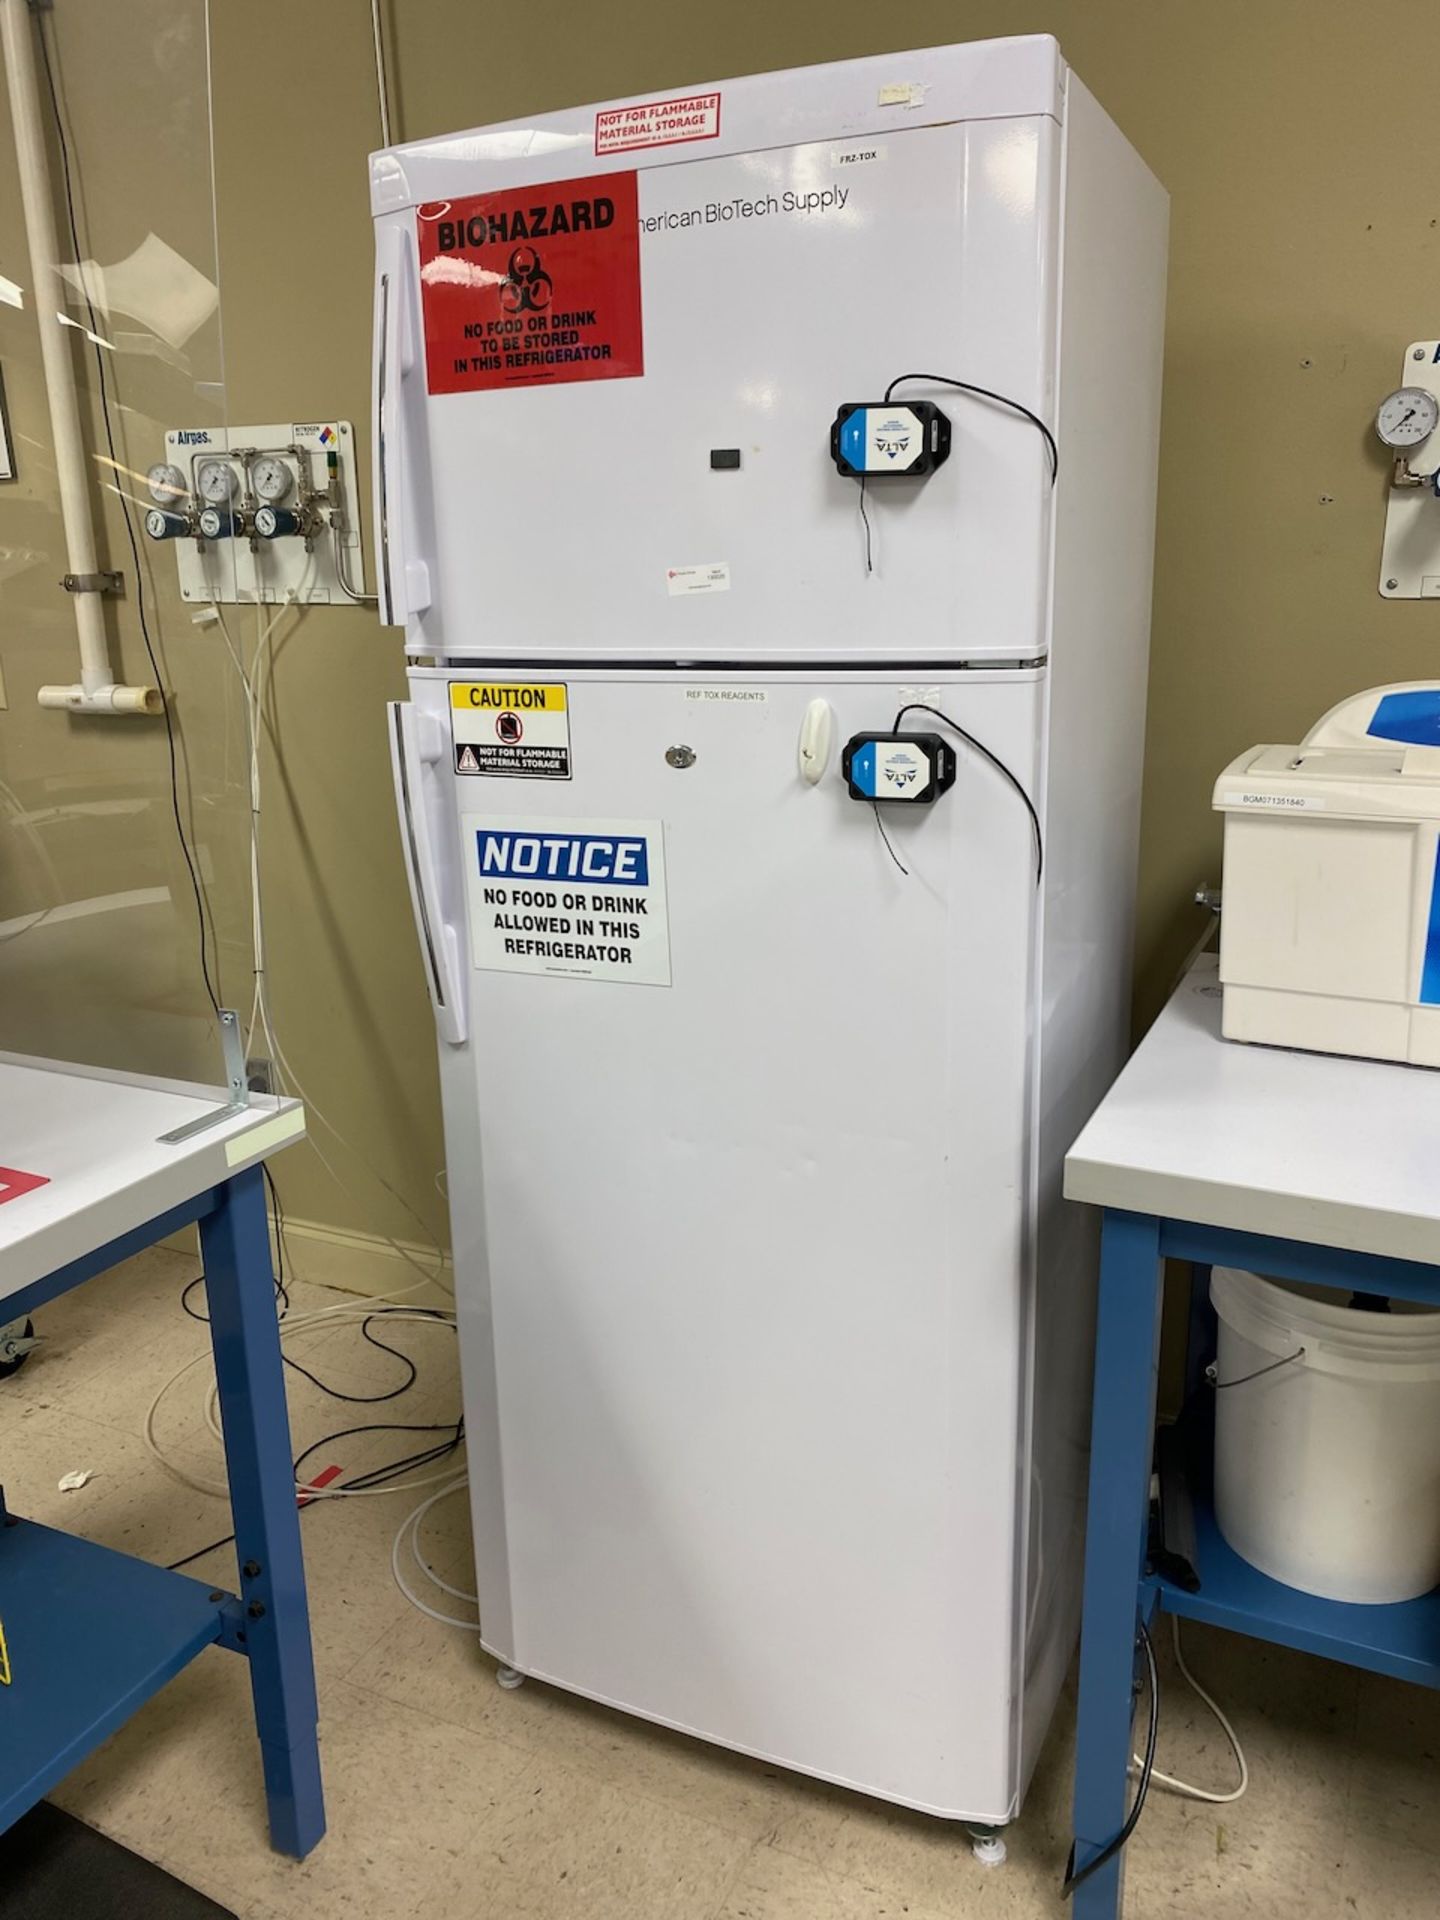 American Biotech Supply Refrigerator/Freezer